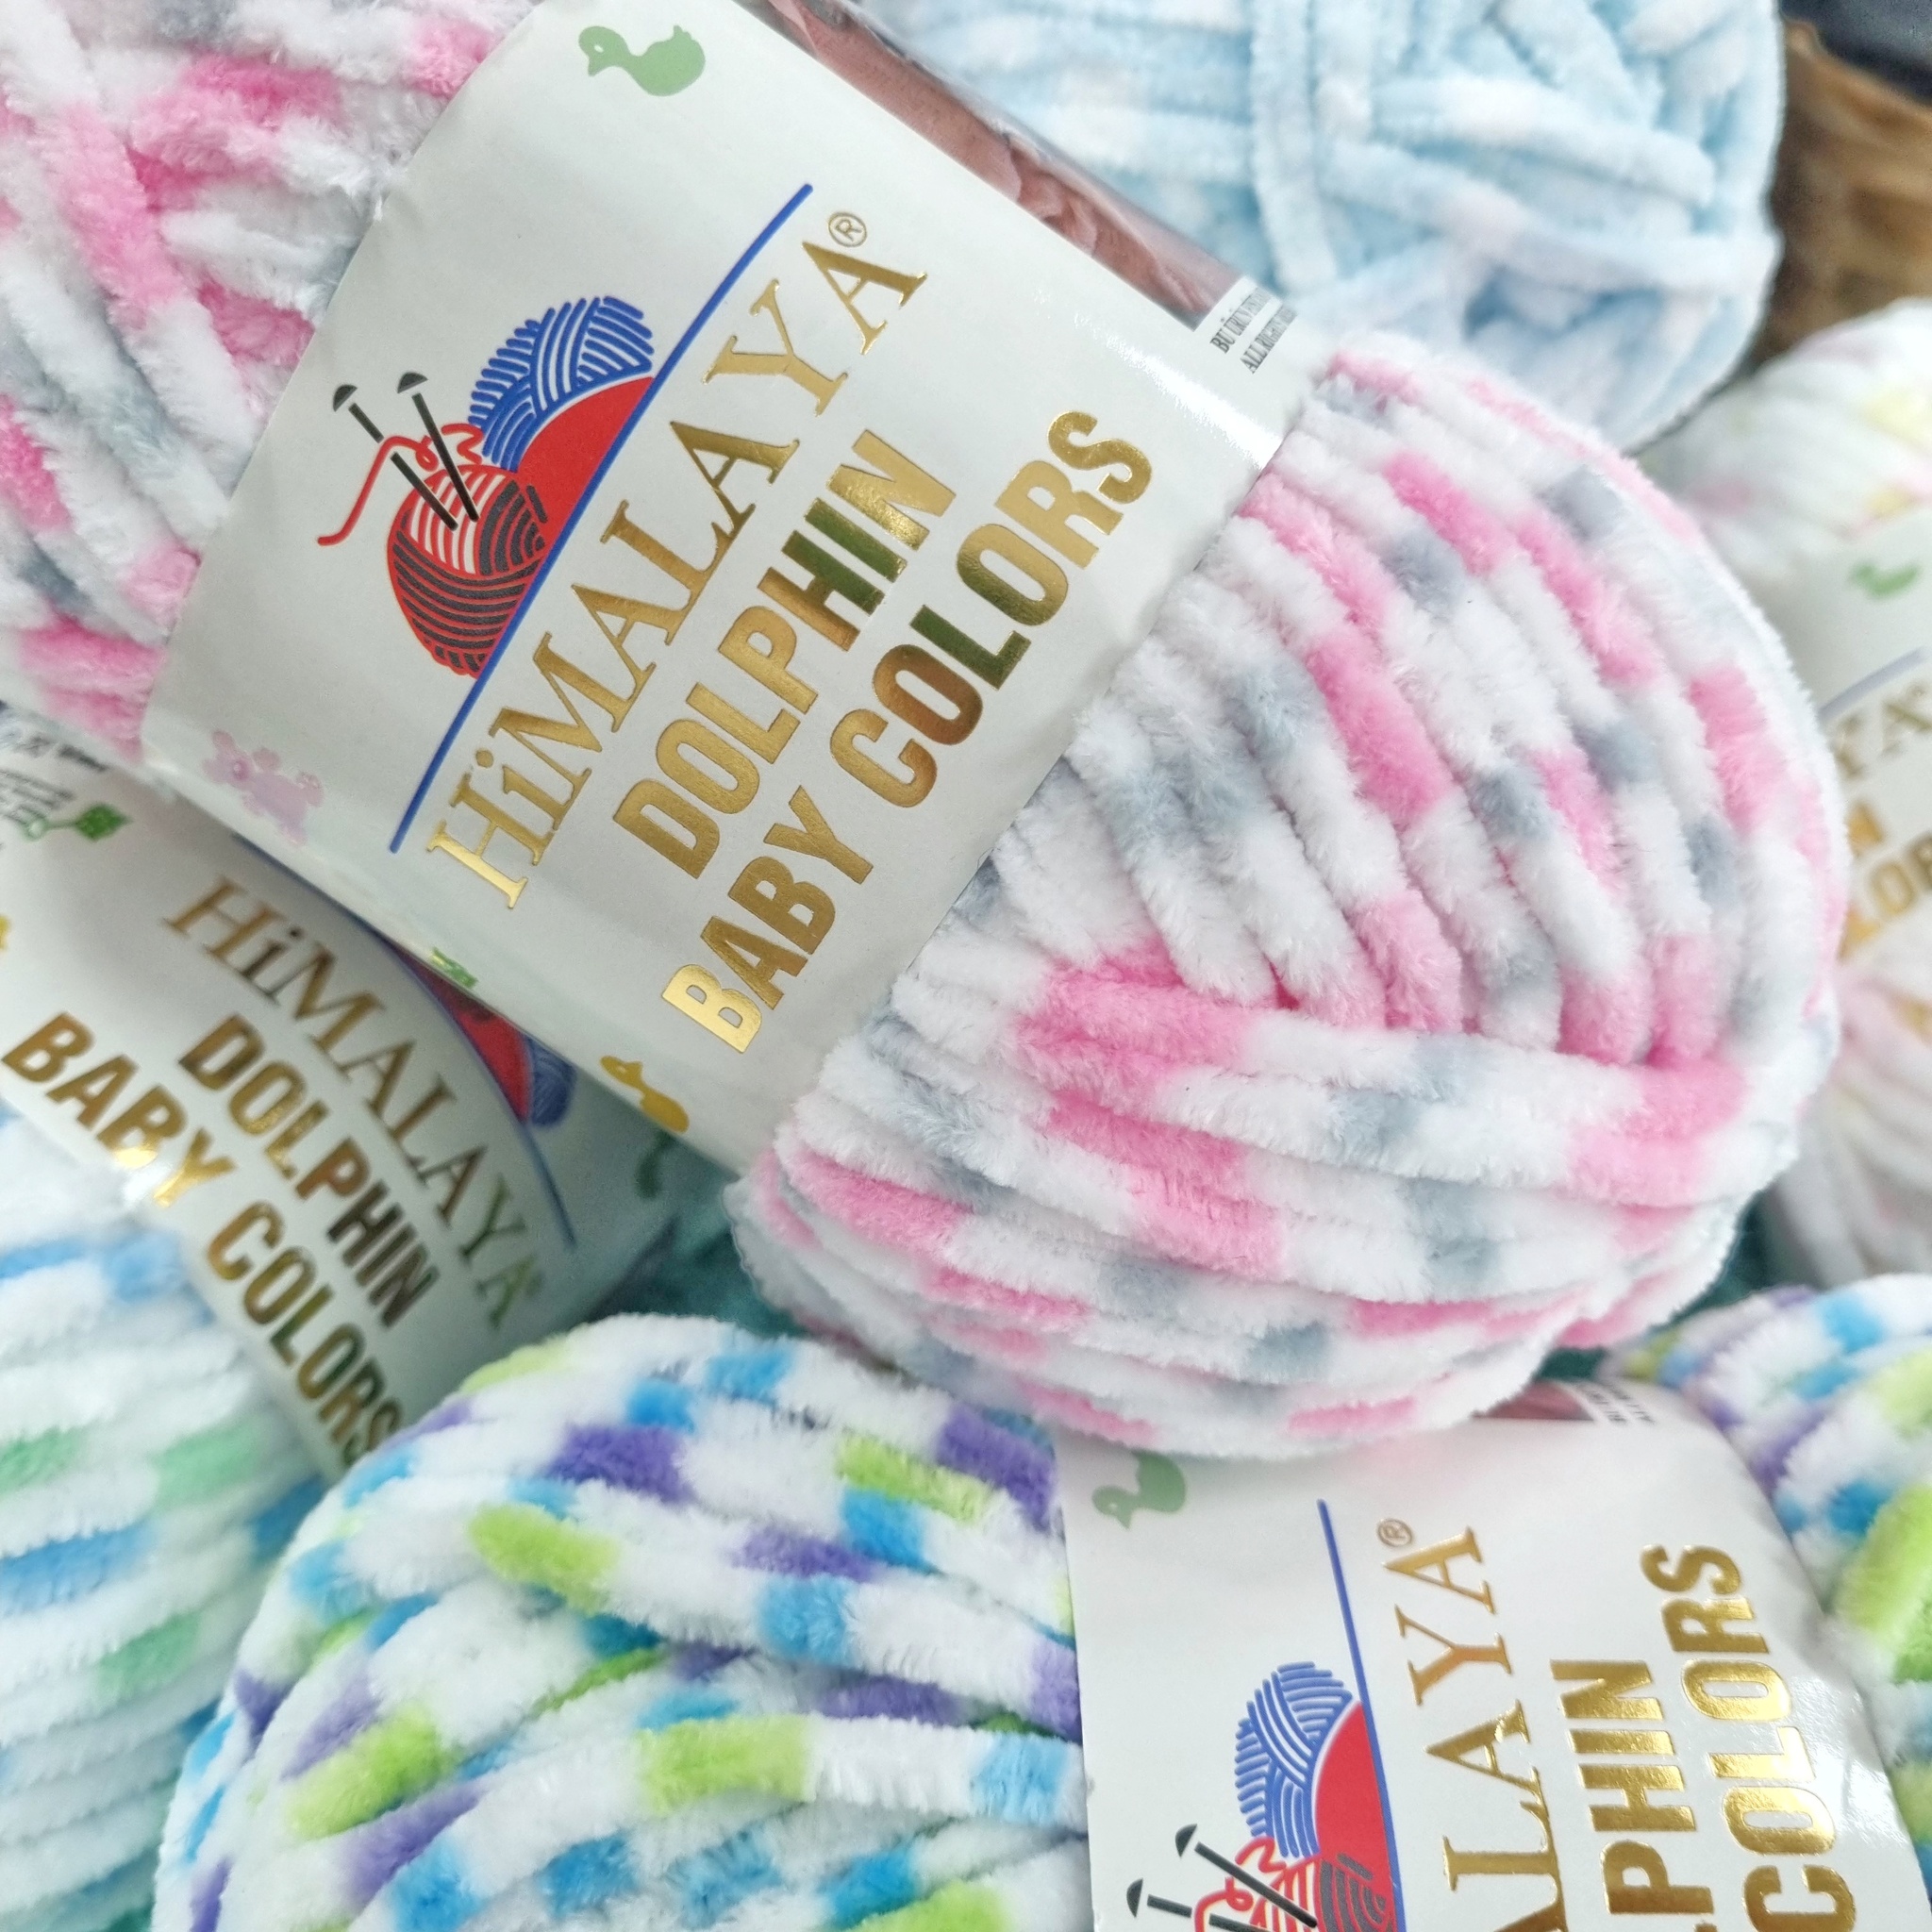 Himalaya Dolphin Baby Yarn Velvet Yarn Plush Yarn Knitting Yarn Baby  Blanket Crochet Yarn, Baby Blanket Yarn Yarn Chenille Yarn Winter Yarn 